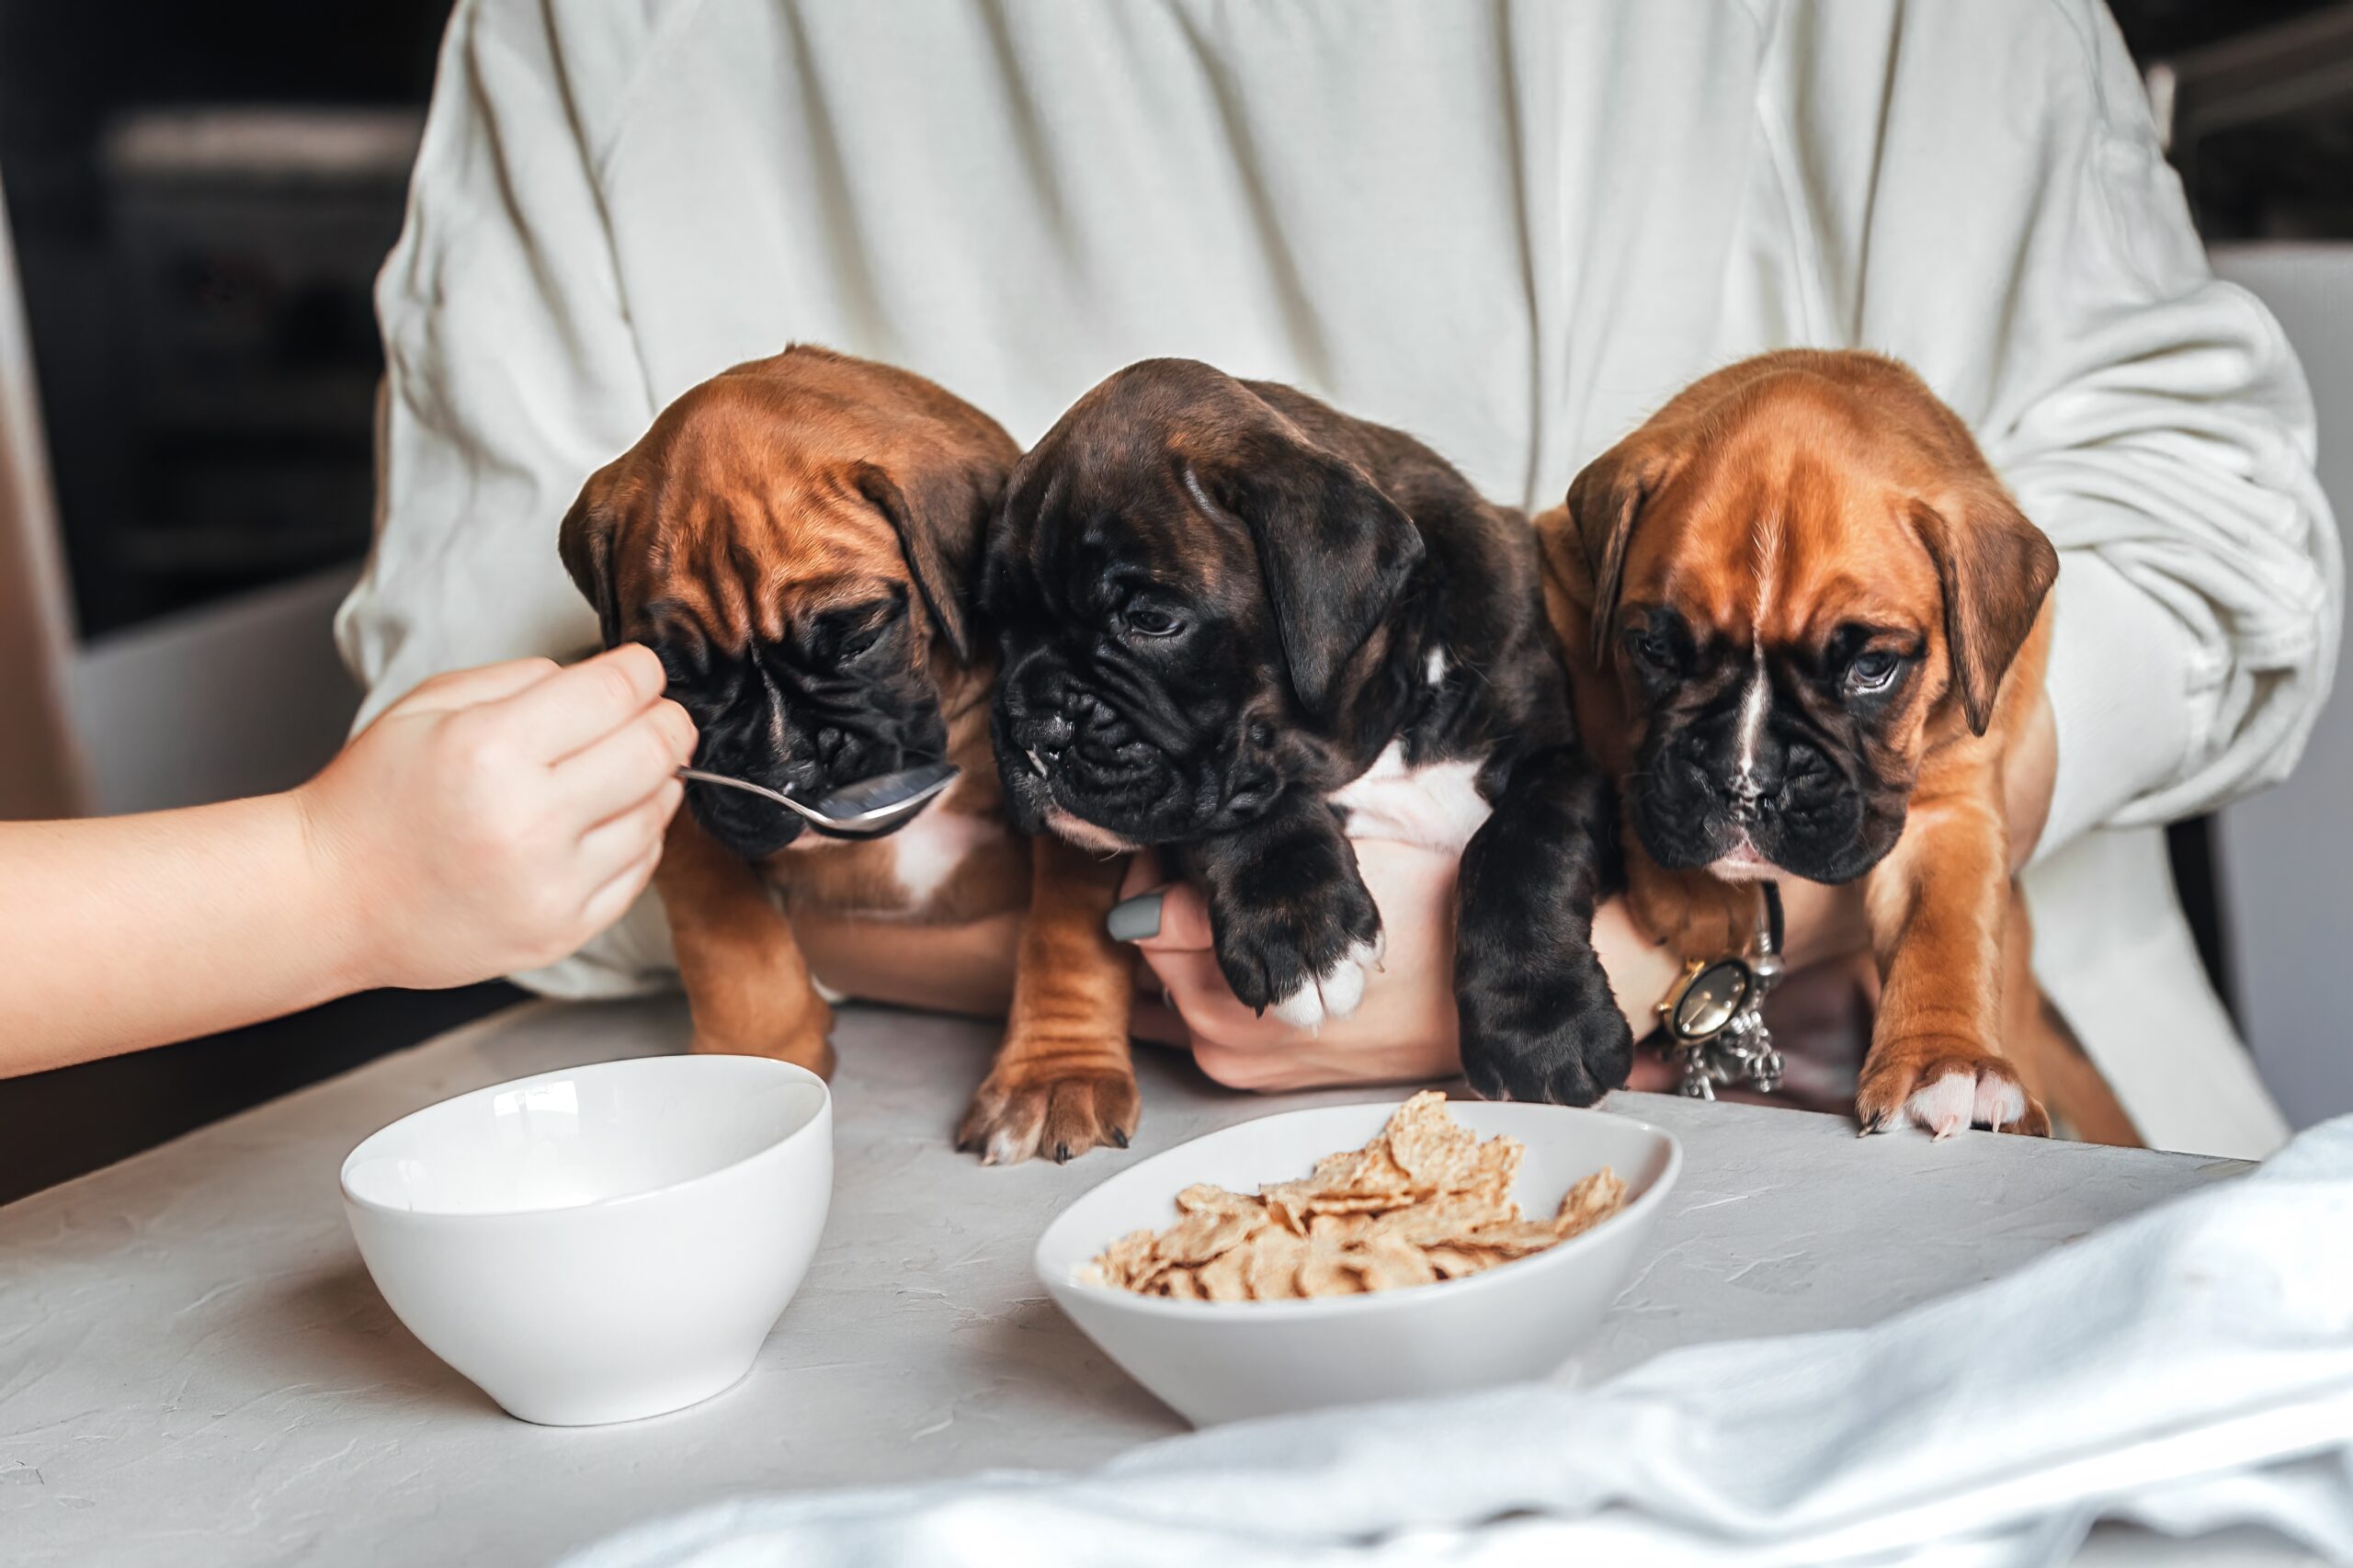 feeding small puppies at home 2022 11 15 11 37 29 utc